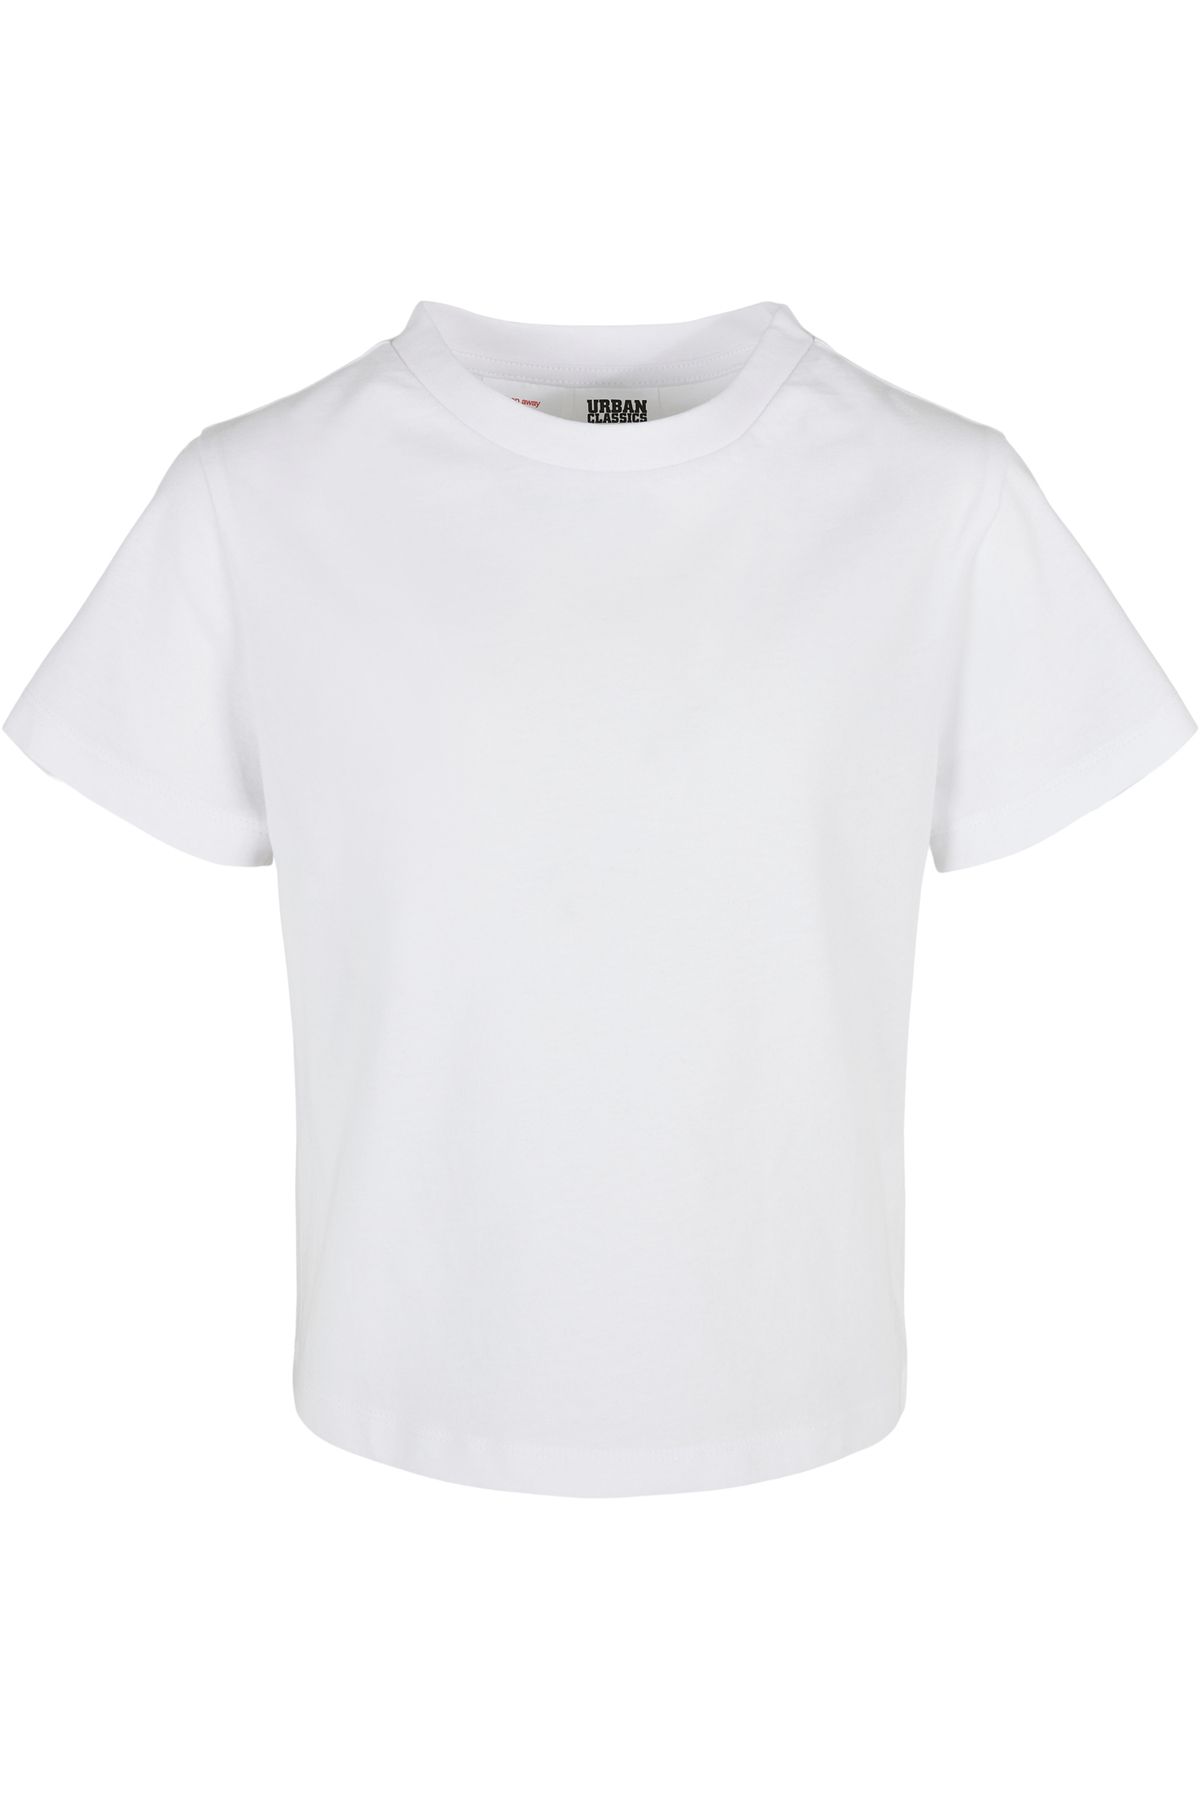 Trendyol - Kinder-Mädchen-Basic-Box-T-Shirt Urban Classics